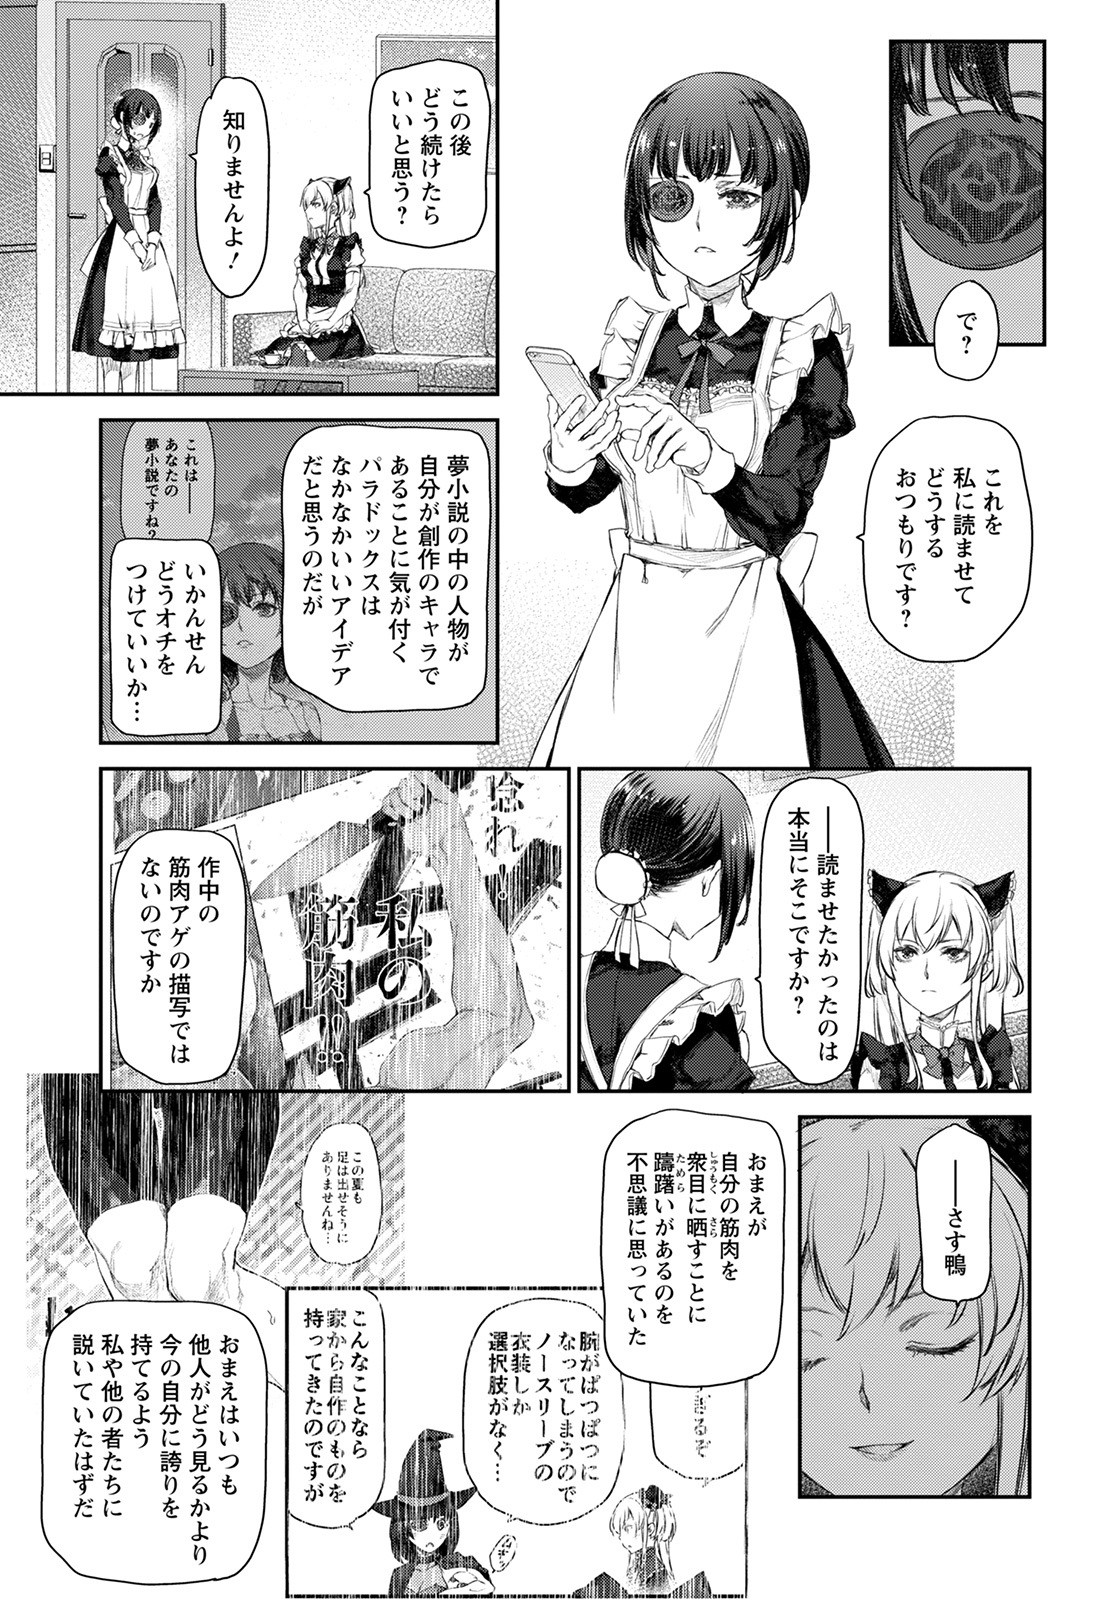 Uchi no Maid ga Uzasugiru! - Chapter 51 - Page 25